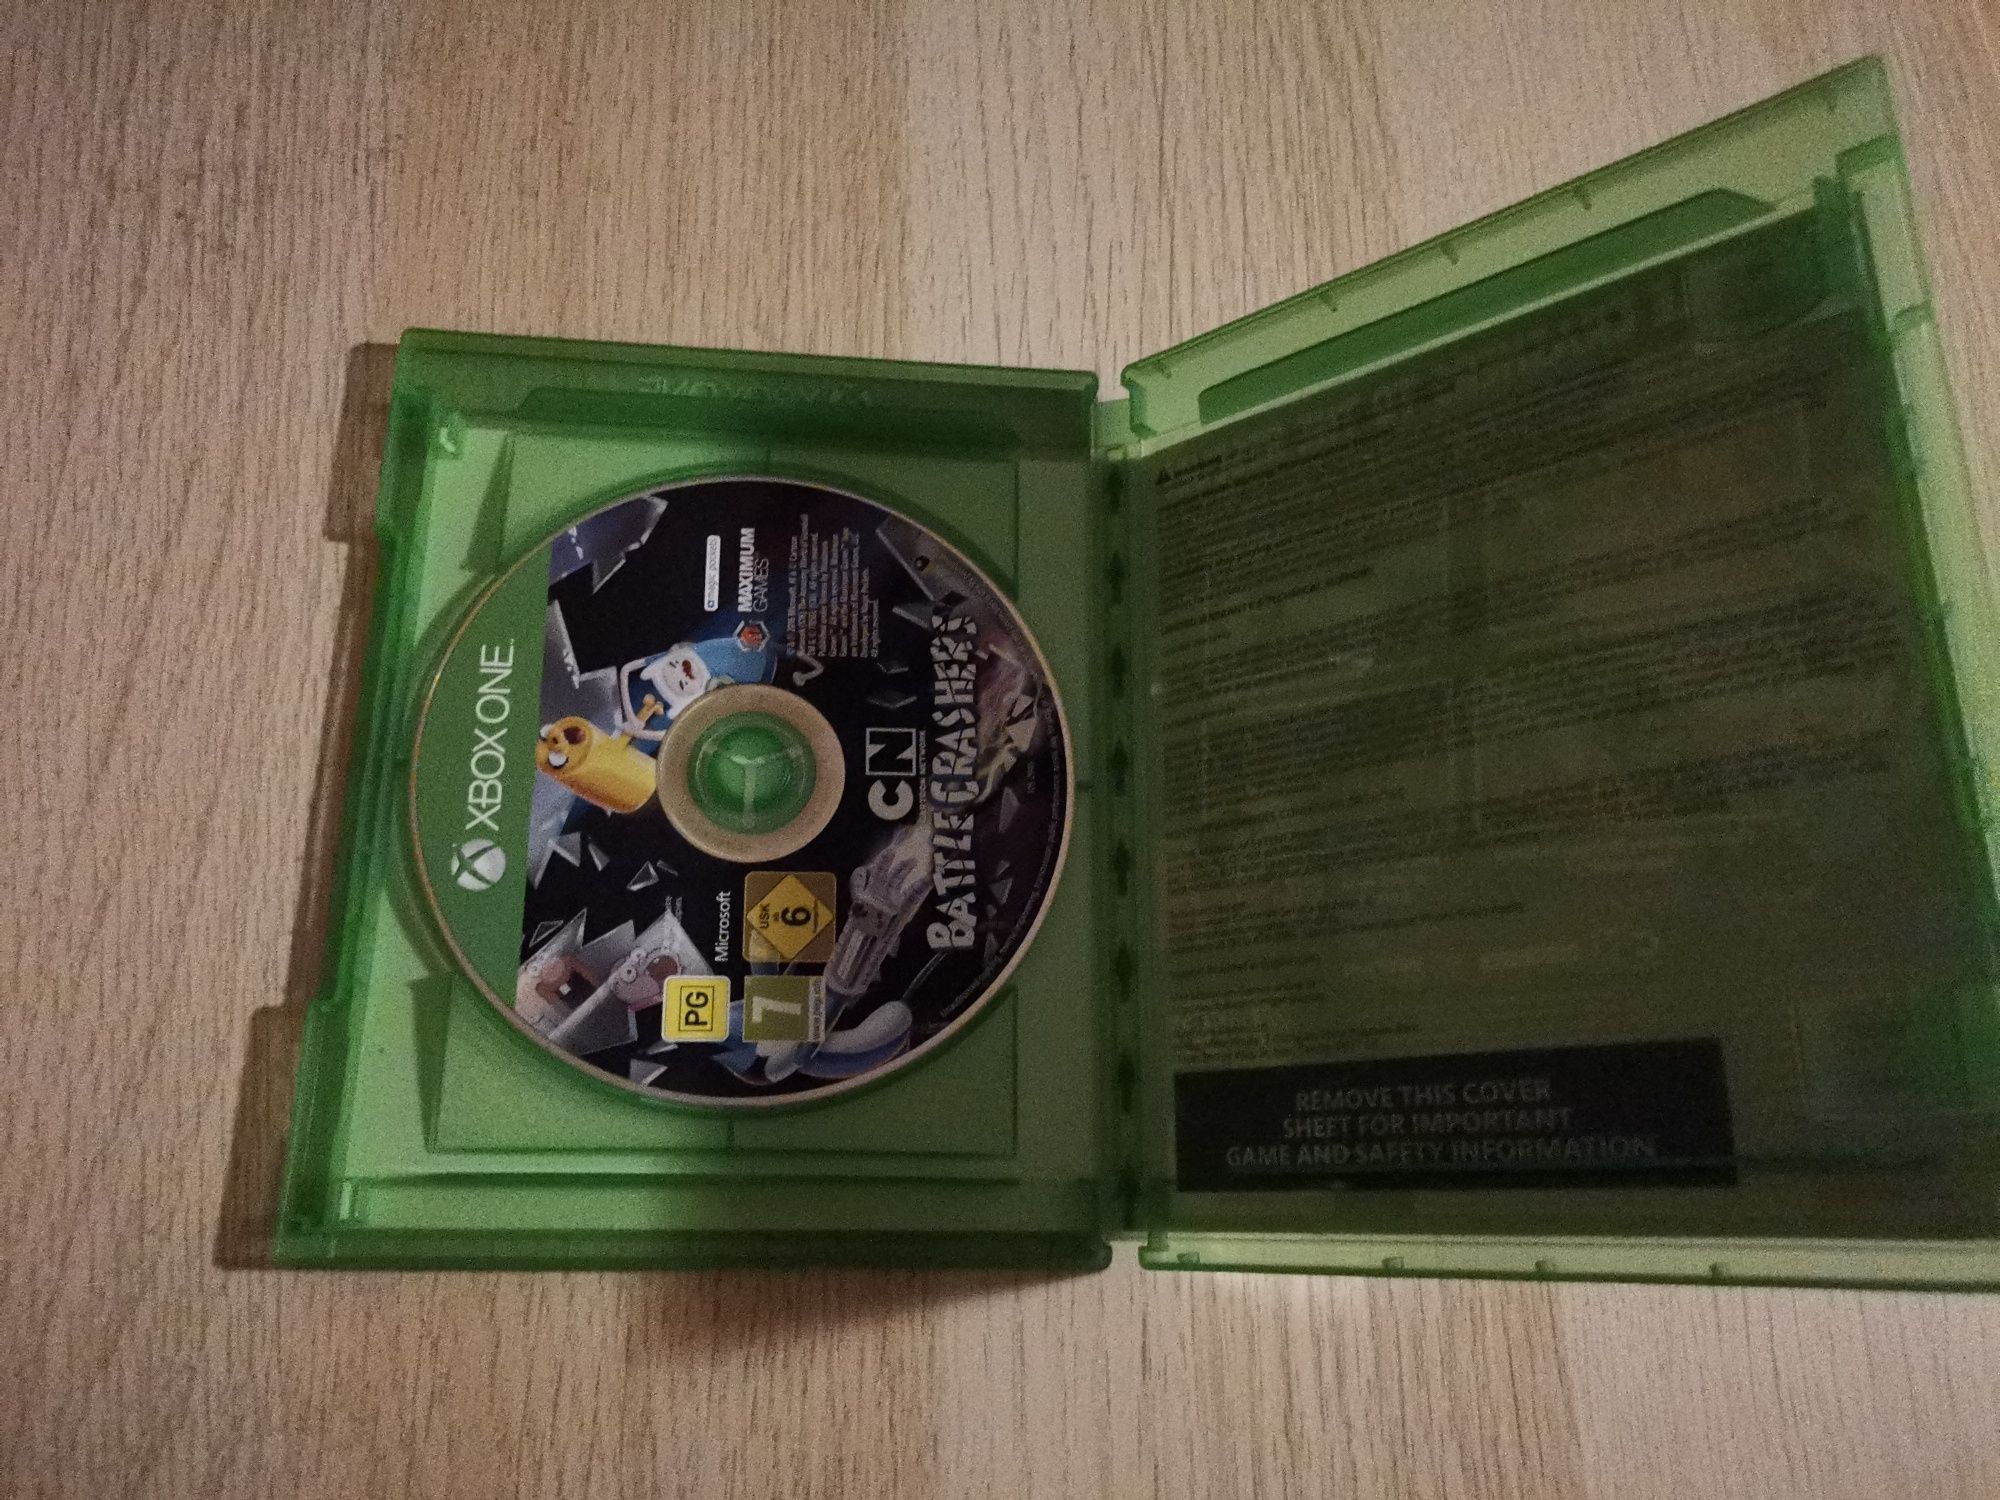 Cartoon Network battlecrashers Xbox One S X Series